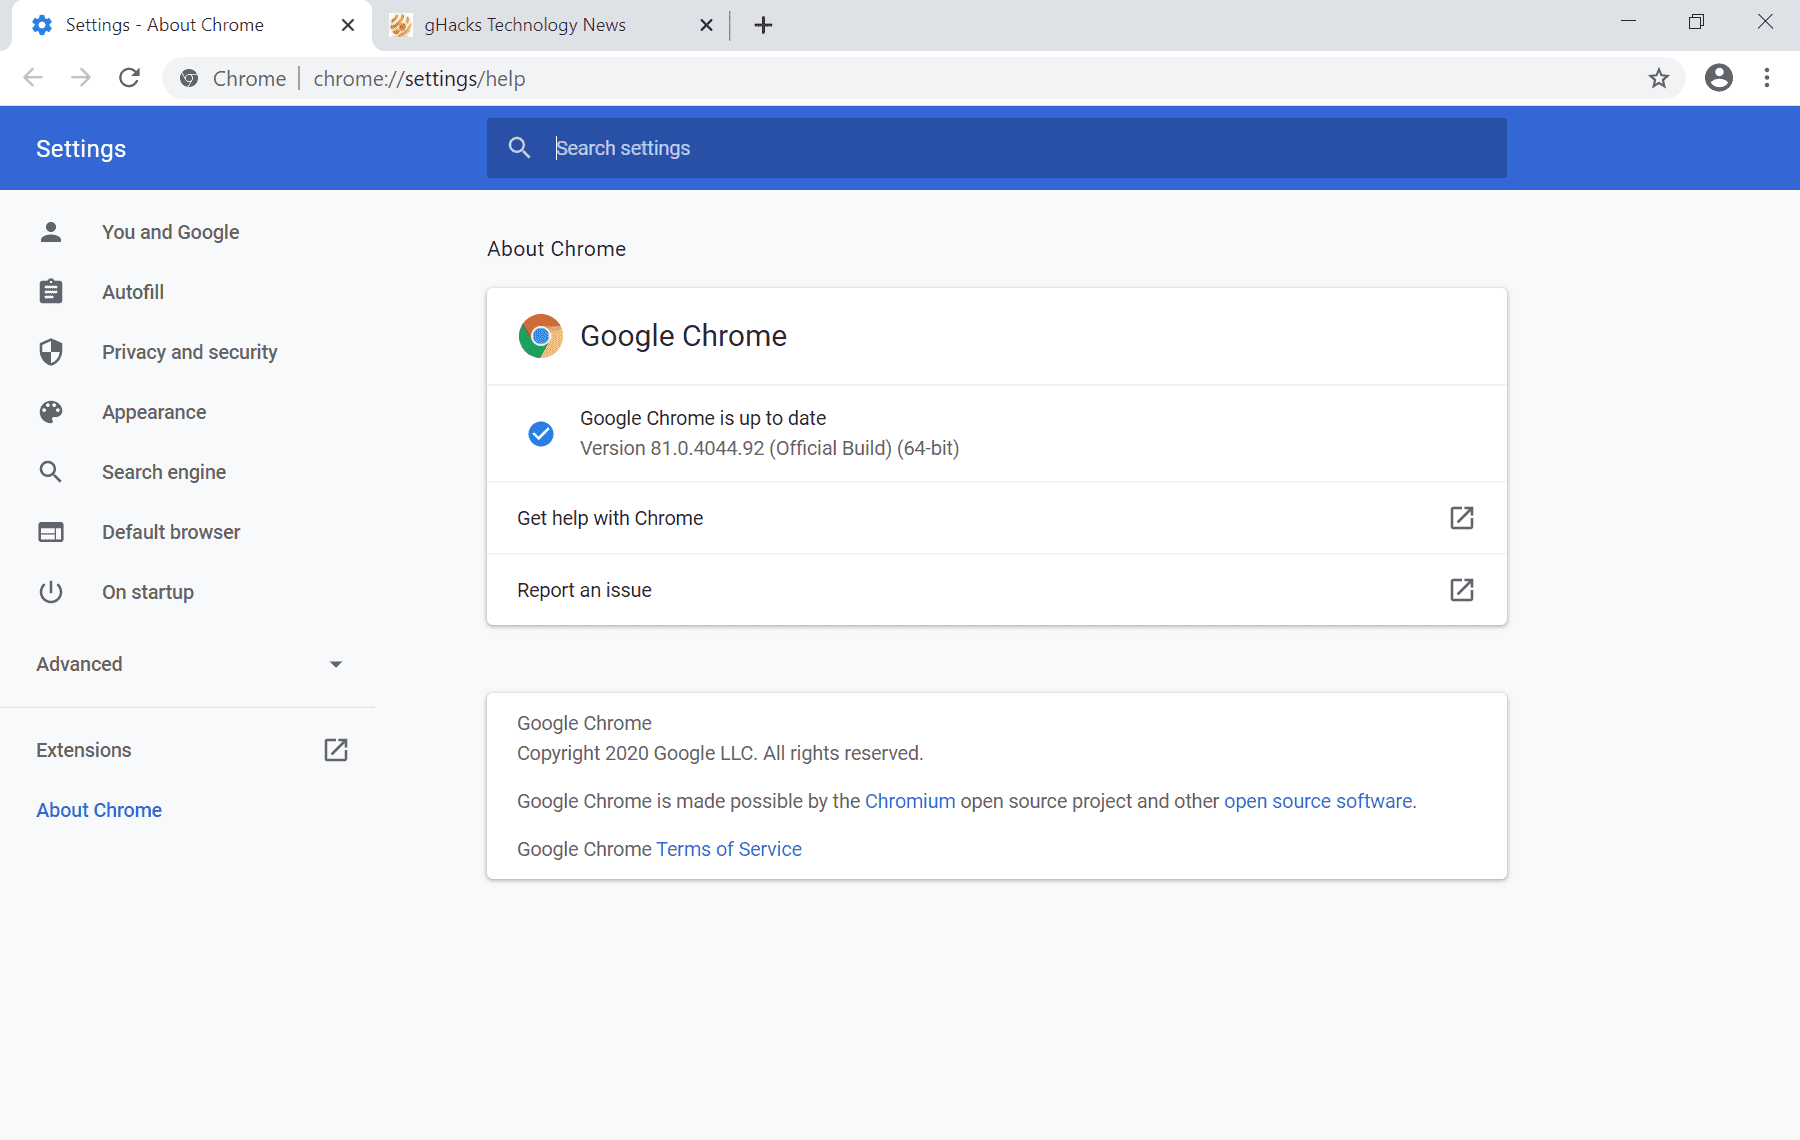 Google Chrome Update 81